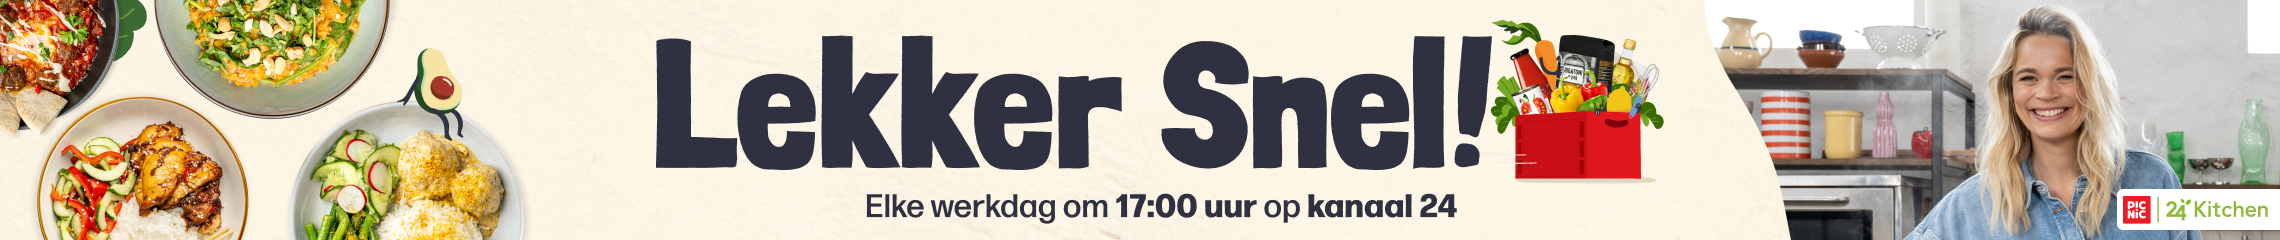 Homepage banner Lekker Snel!